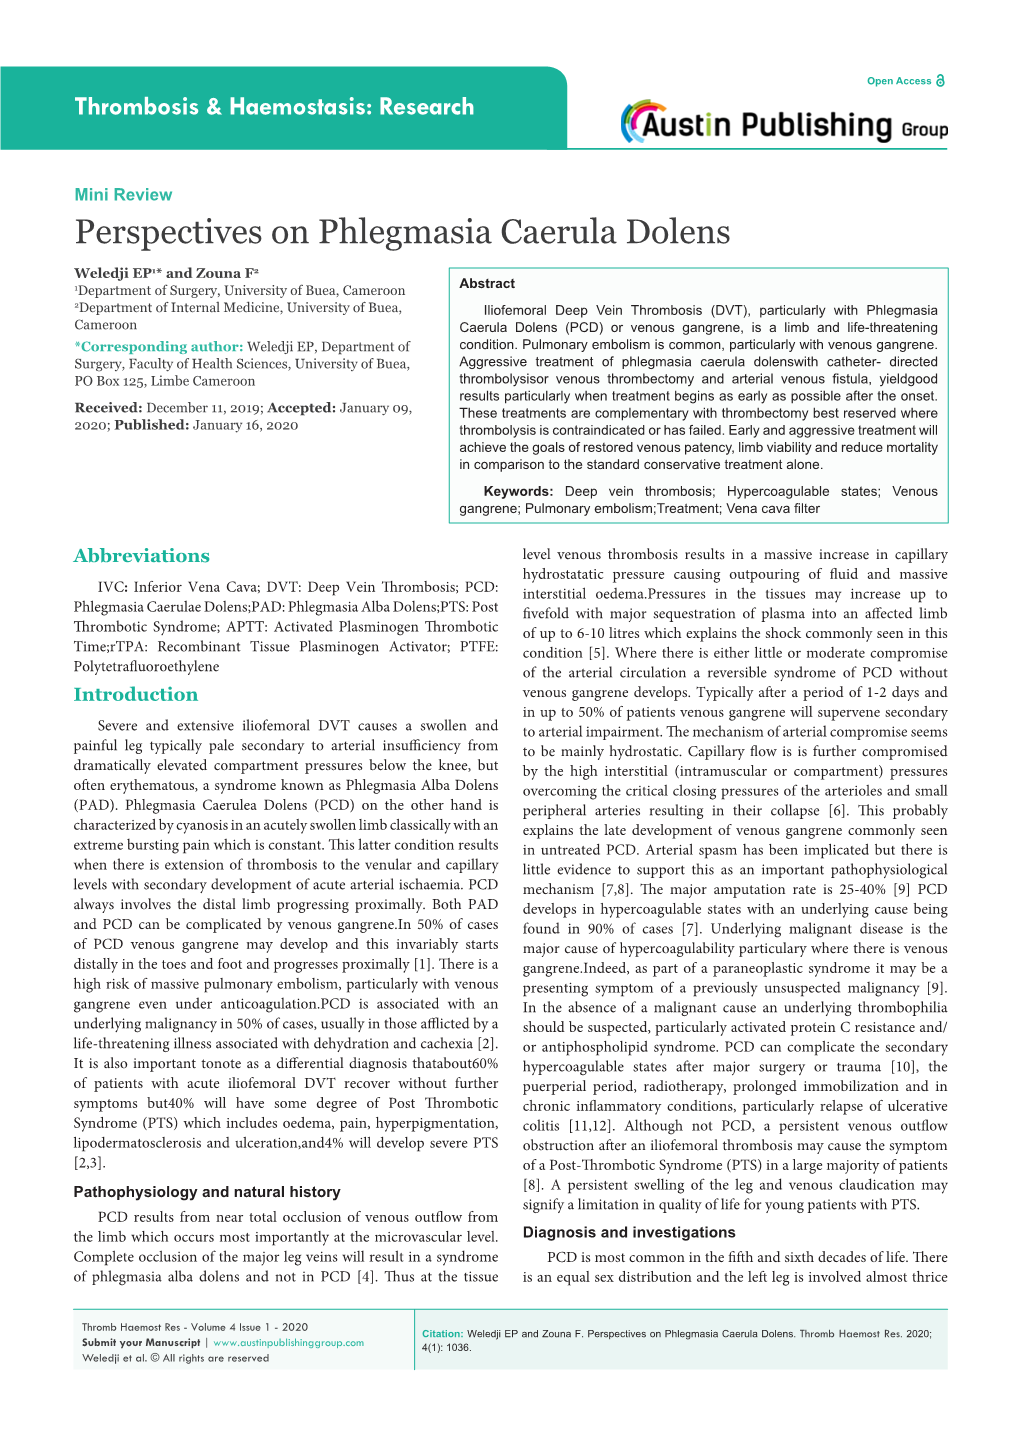 Perspectives on Phlegmasia Caerula Dolens